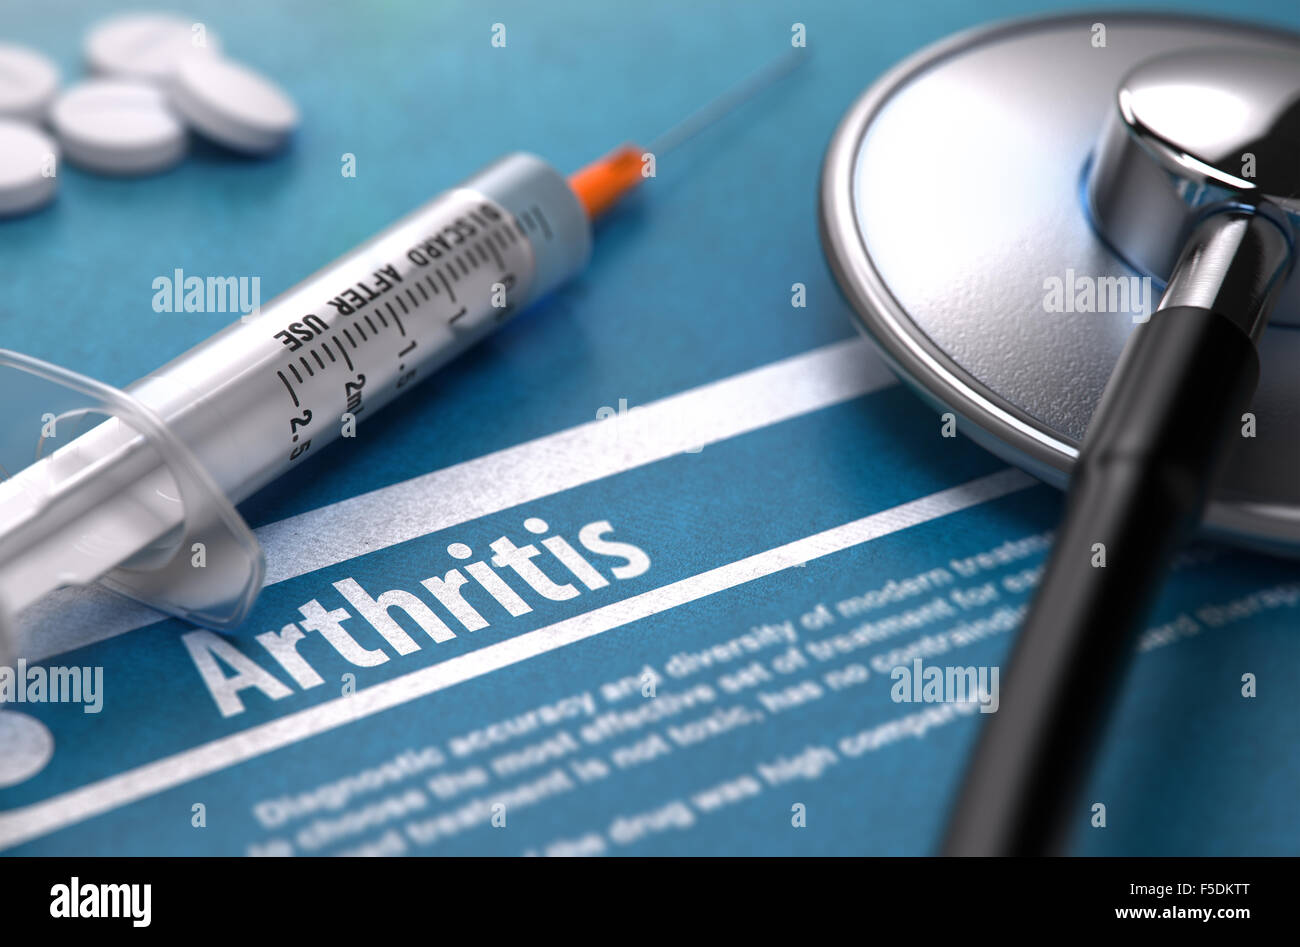 Arthritis. Medical Concept on Blue Background. Stock Photo